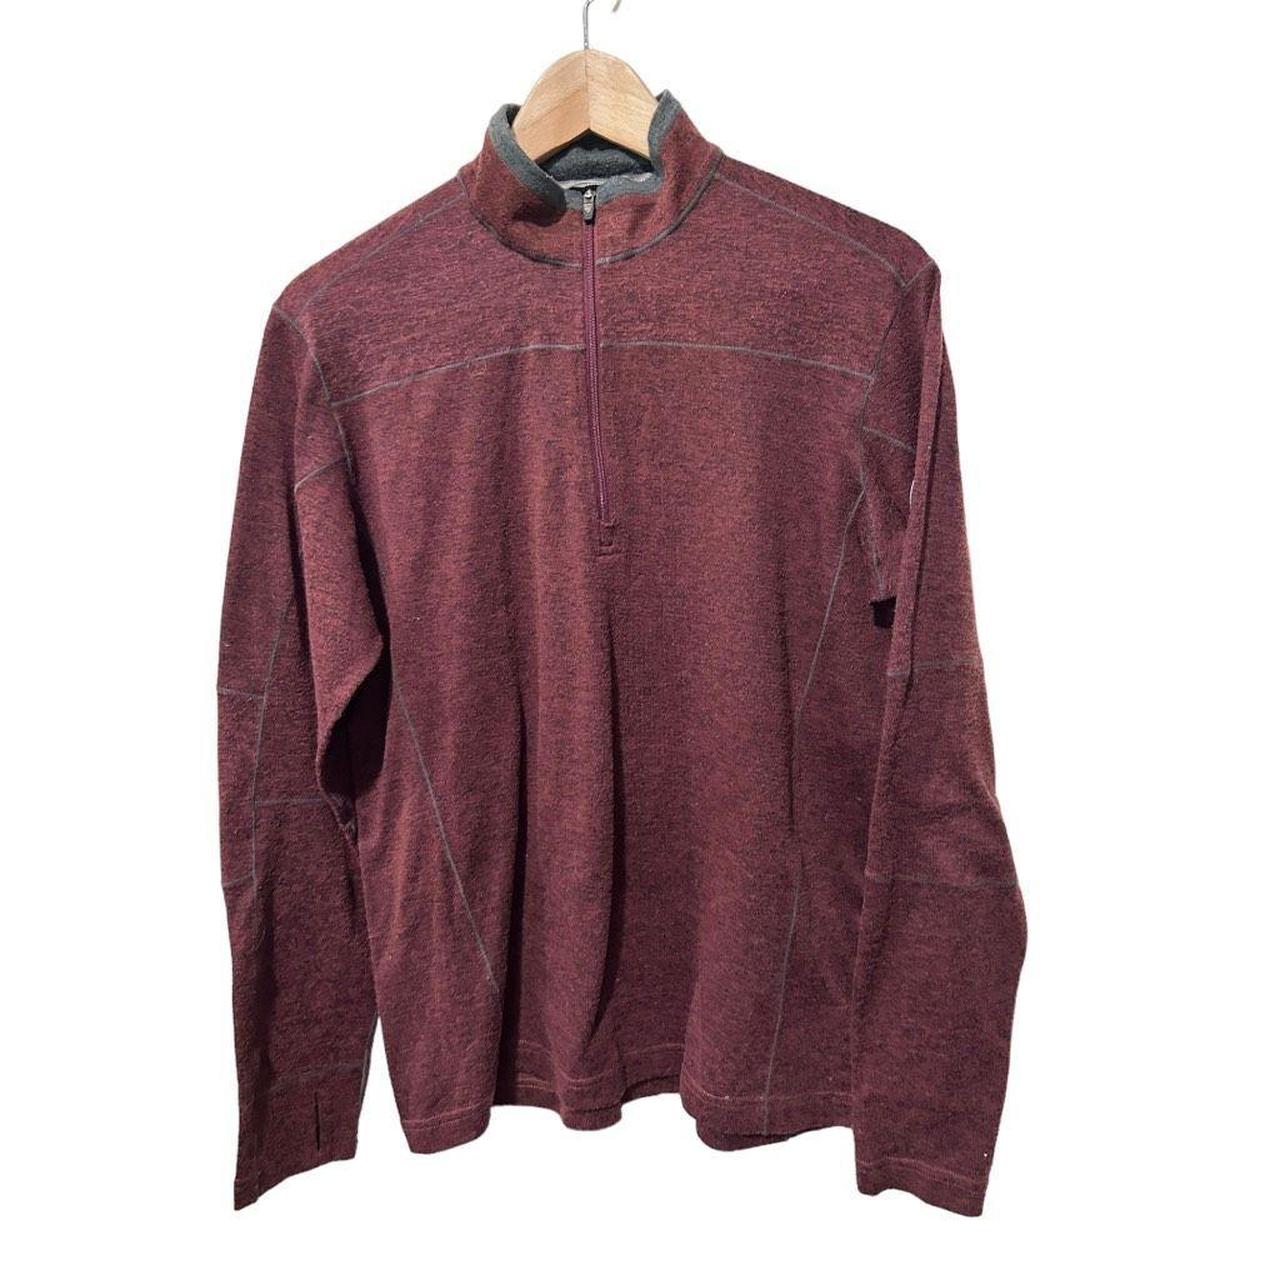 Kuhl Sweater Women's XL maroon wool blend quarter - Depop